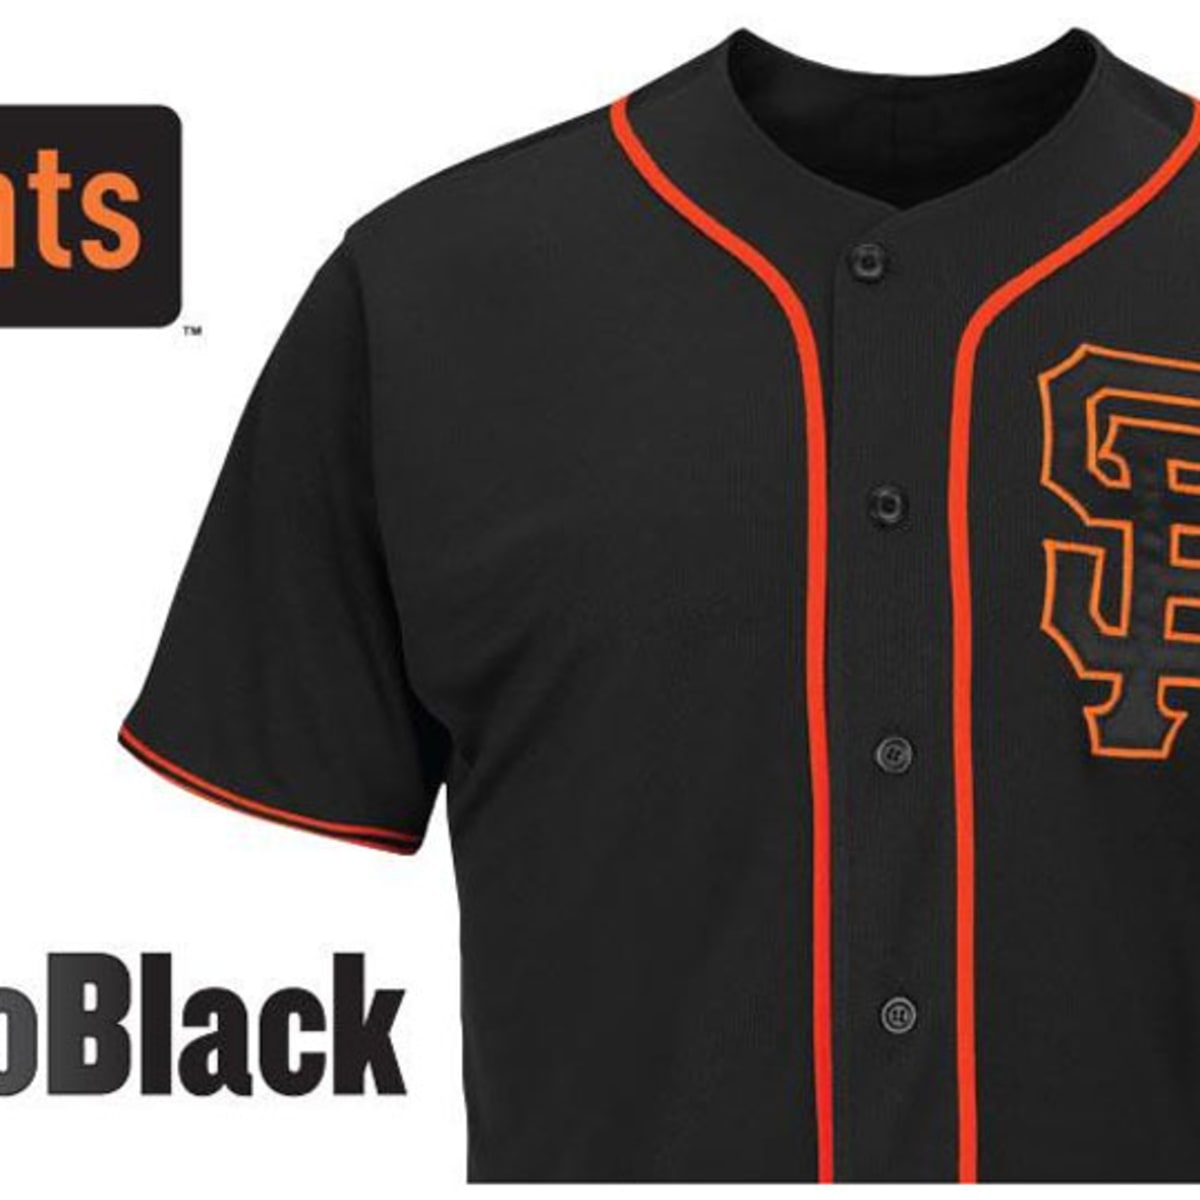 San Francisco Giants unveil new black 